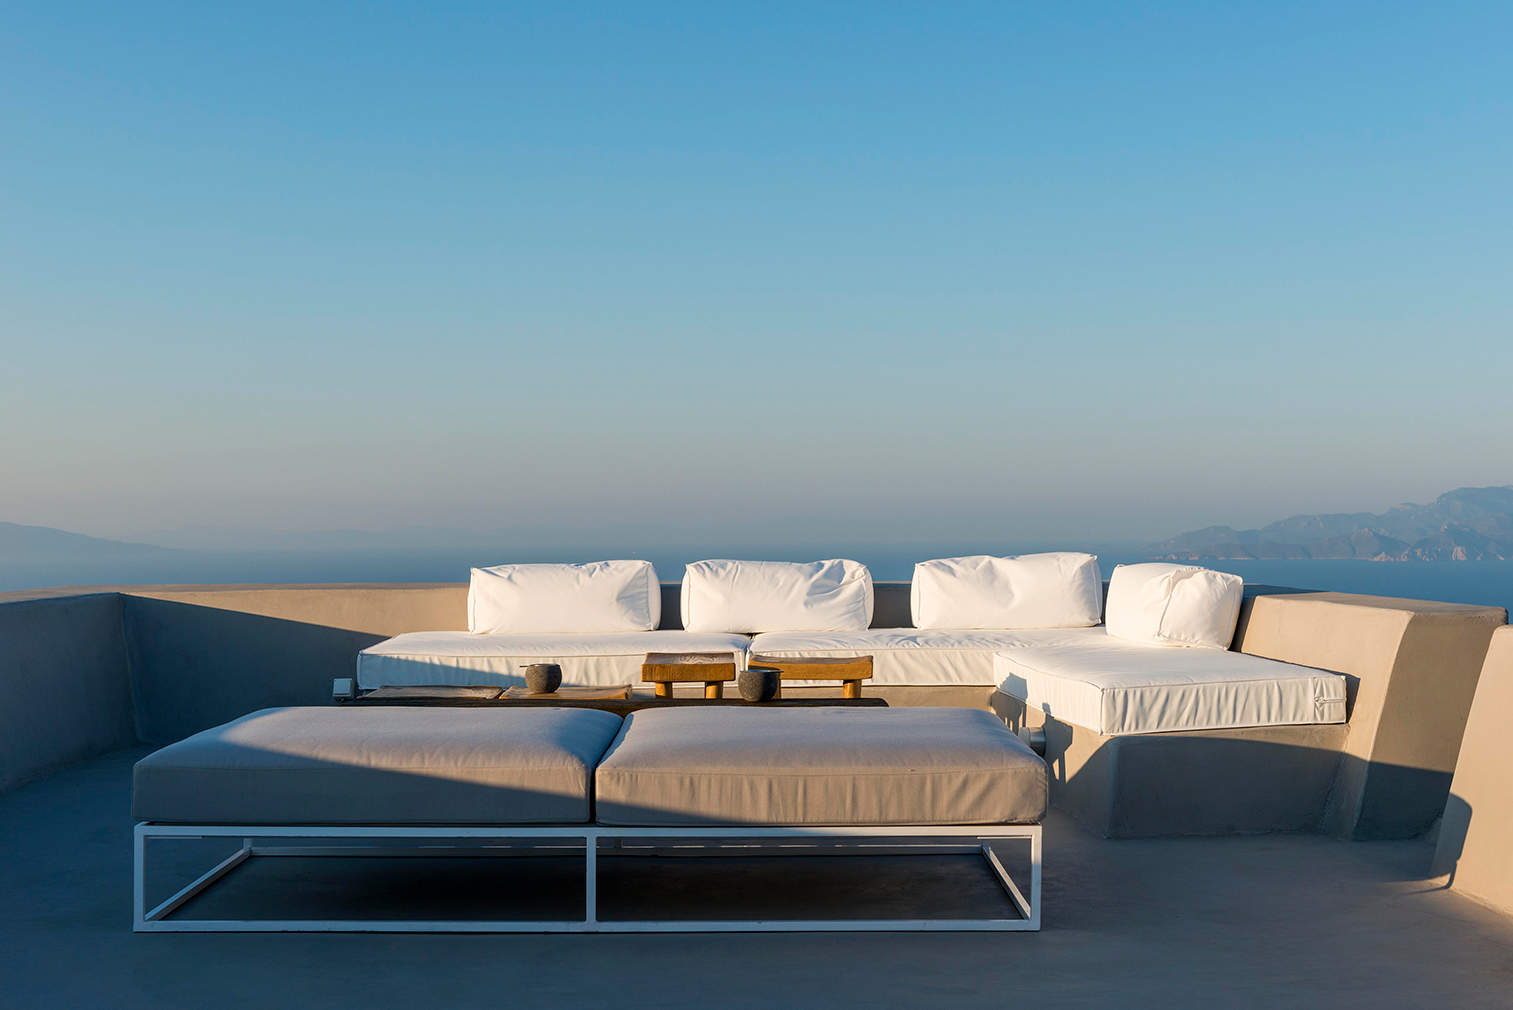 Greek holiday home for rent: Villa Nemesis